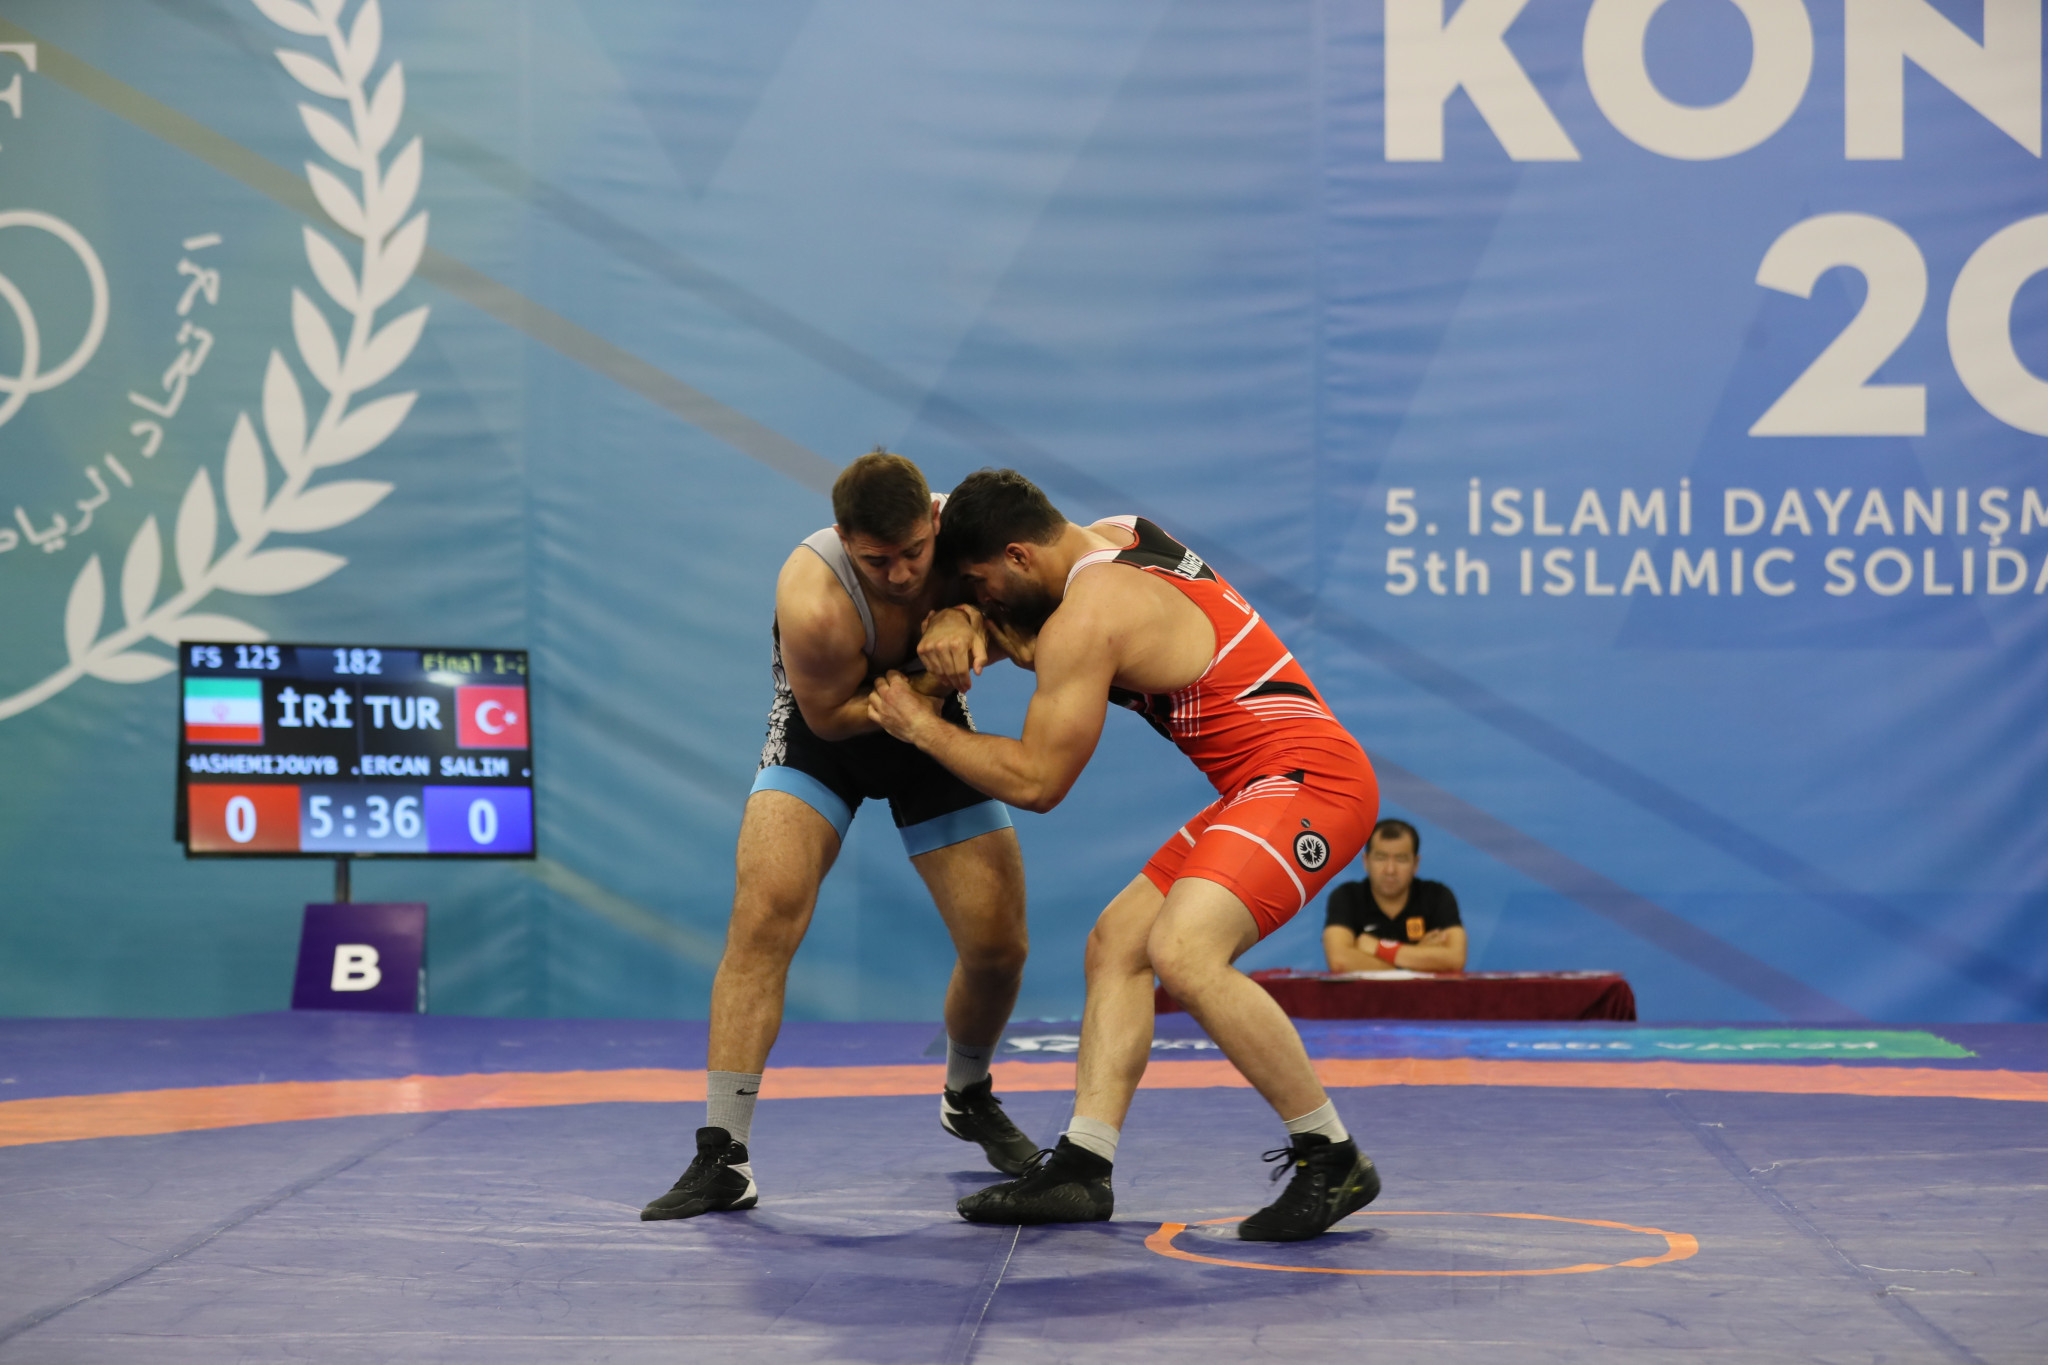 Seyedmehdi Seyedabasli Hashemijouybari was among three Iranian wrestling gold medal winners ©Konya 2021